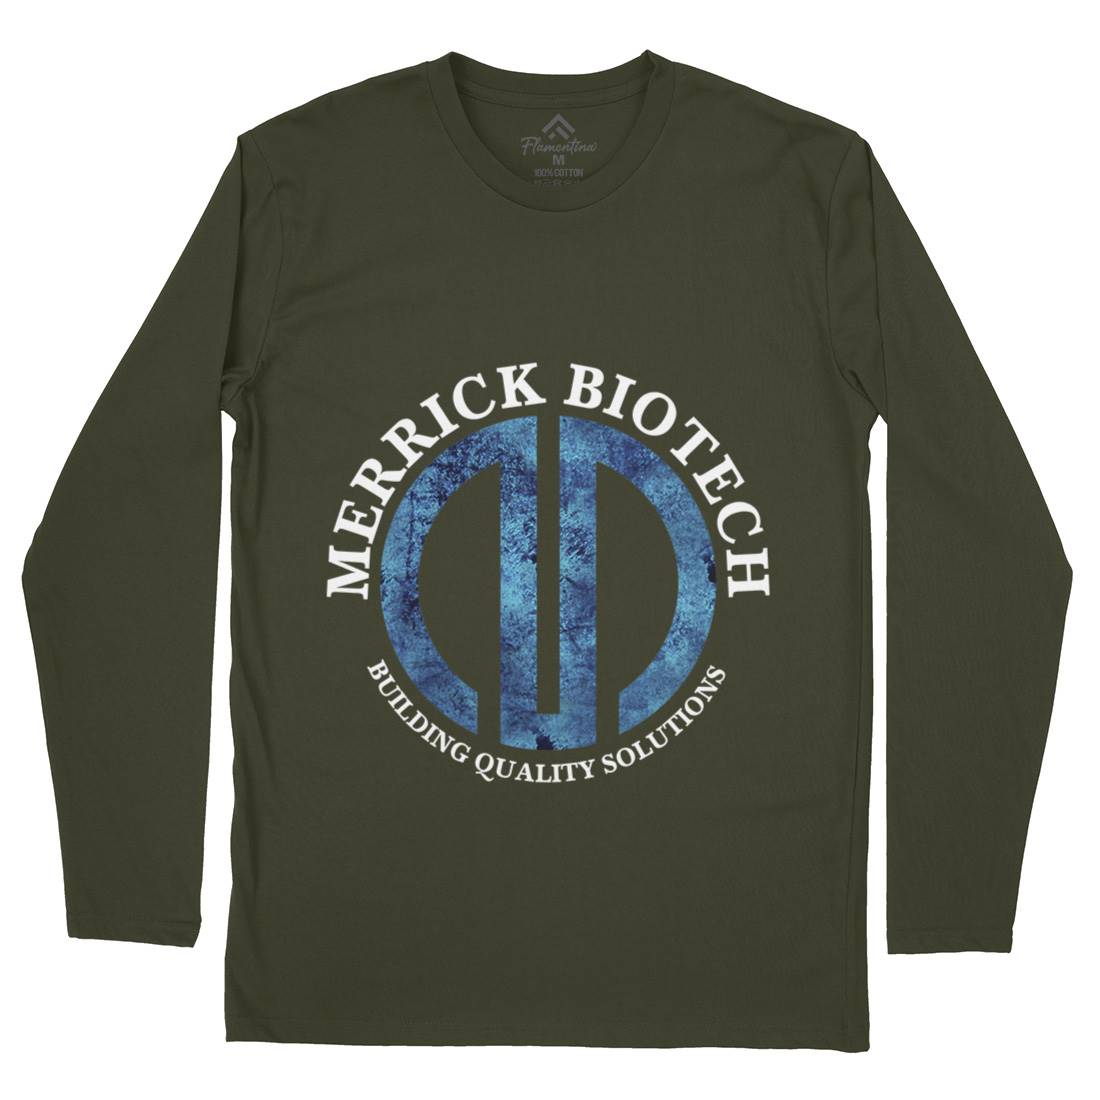 Merrick Biotech Mens Long Sleeve T-Shirt Space D393